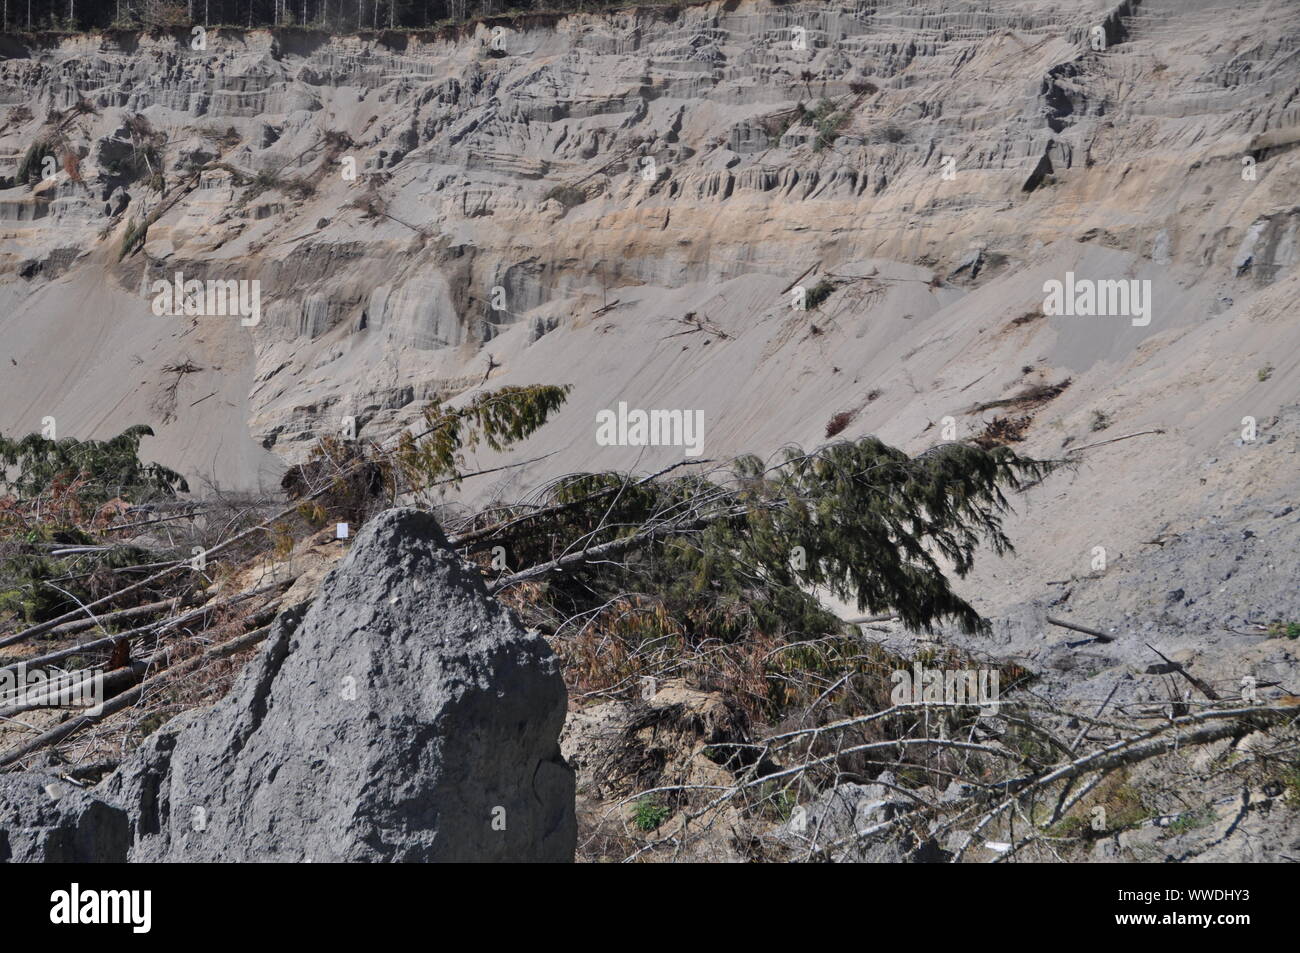 La parte superior del mortal 2014 Oso Landslide, Oso Landslide, North Fork Stillaguamish River Valley, Snohomish County, Washington, EE.UU Foto de stock